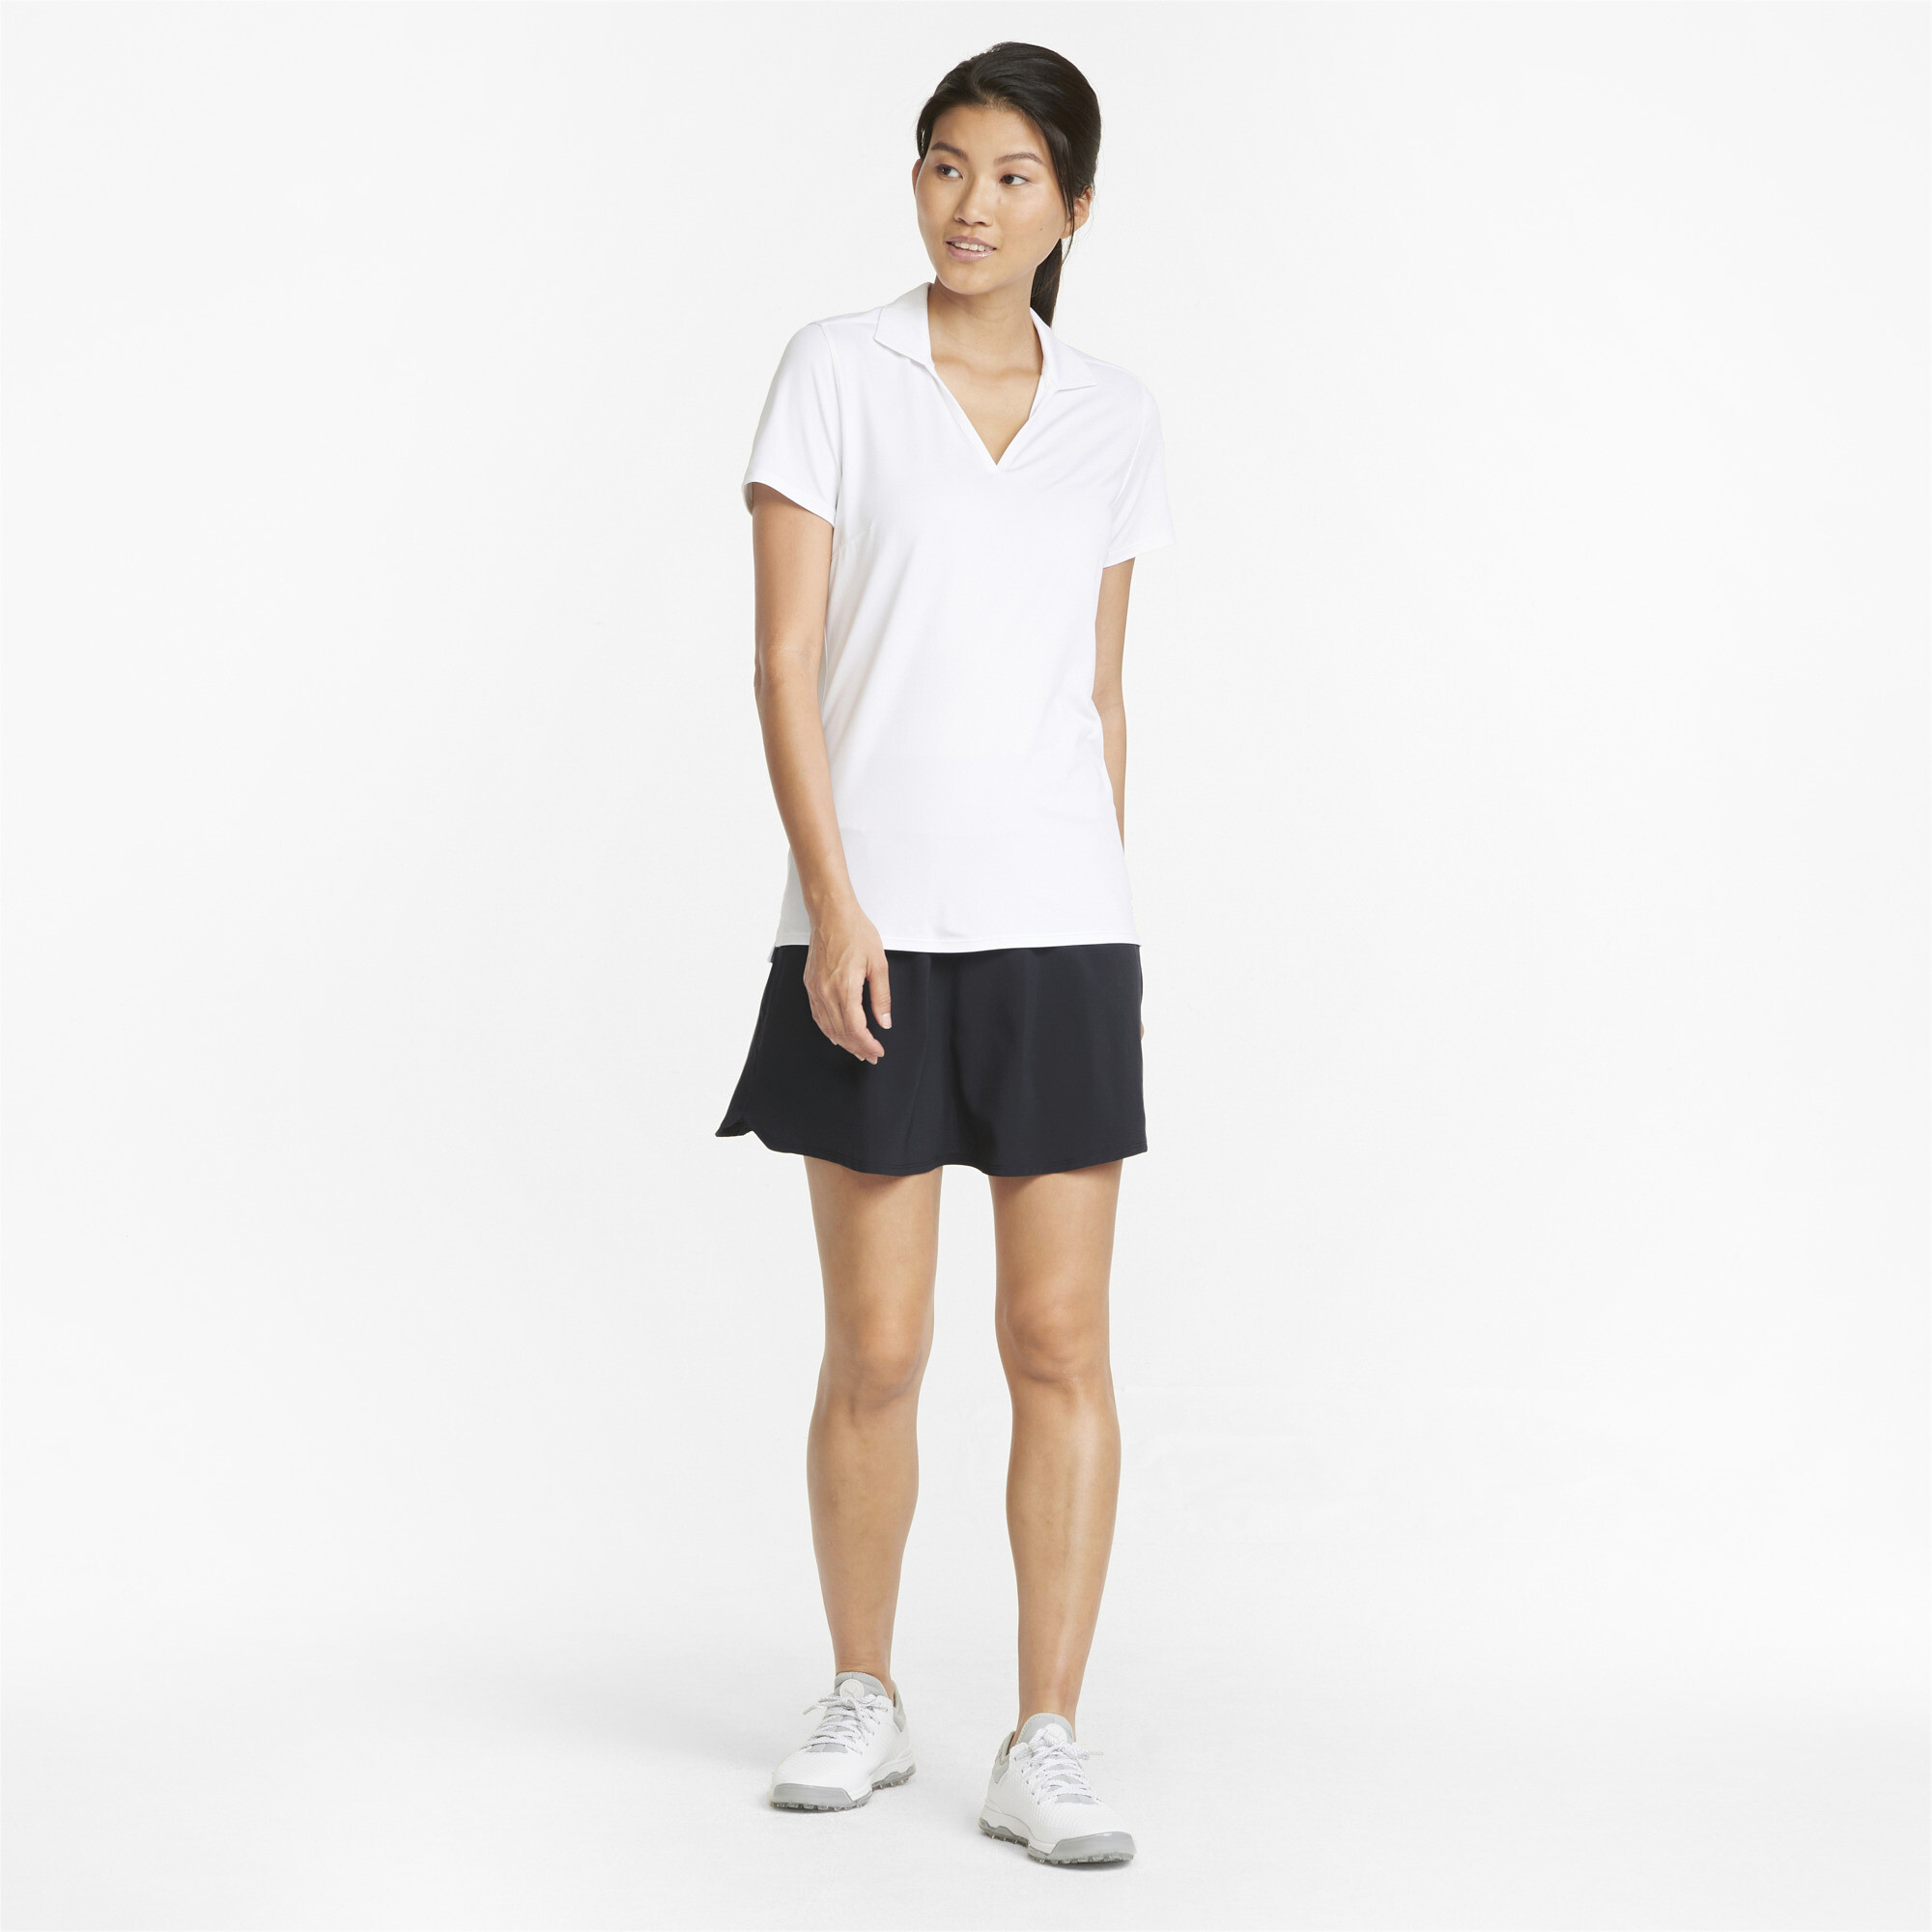 Women's Puma PWRSHAPE Solid's Golf Skirt, Black, Size XXL/S, Clothing